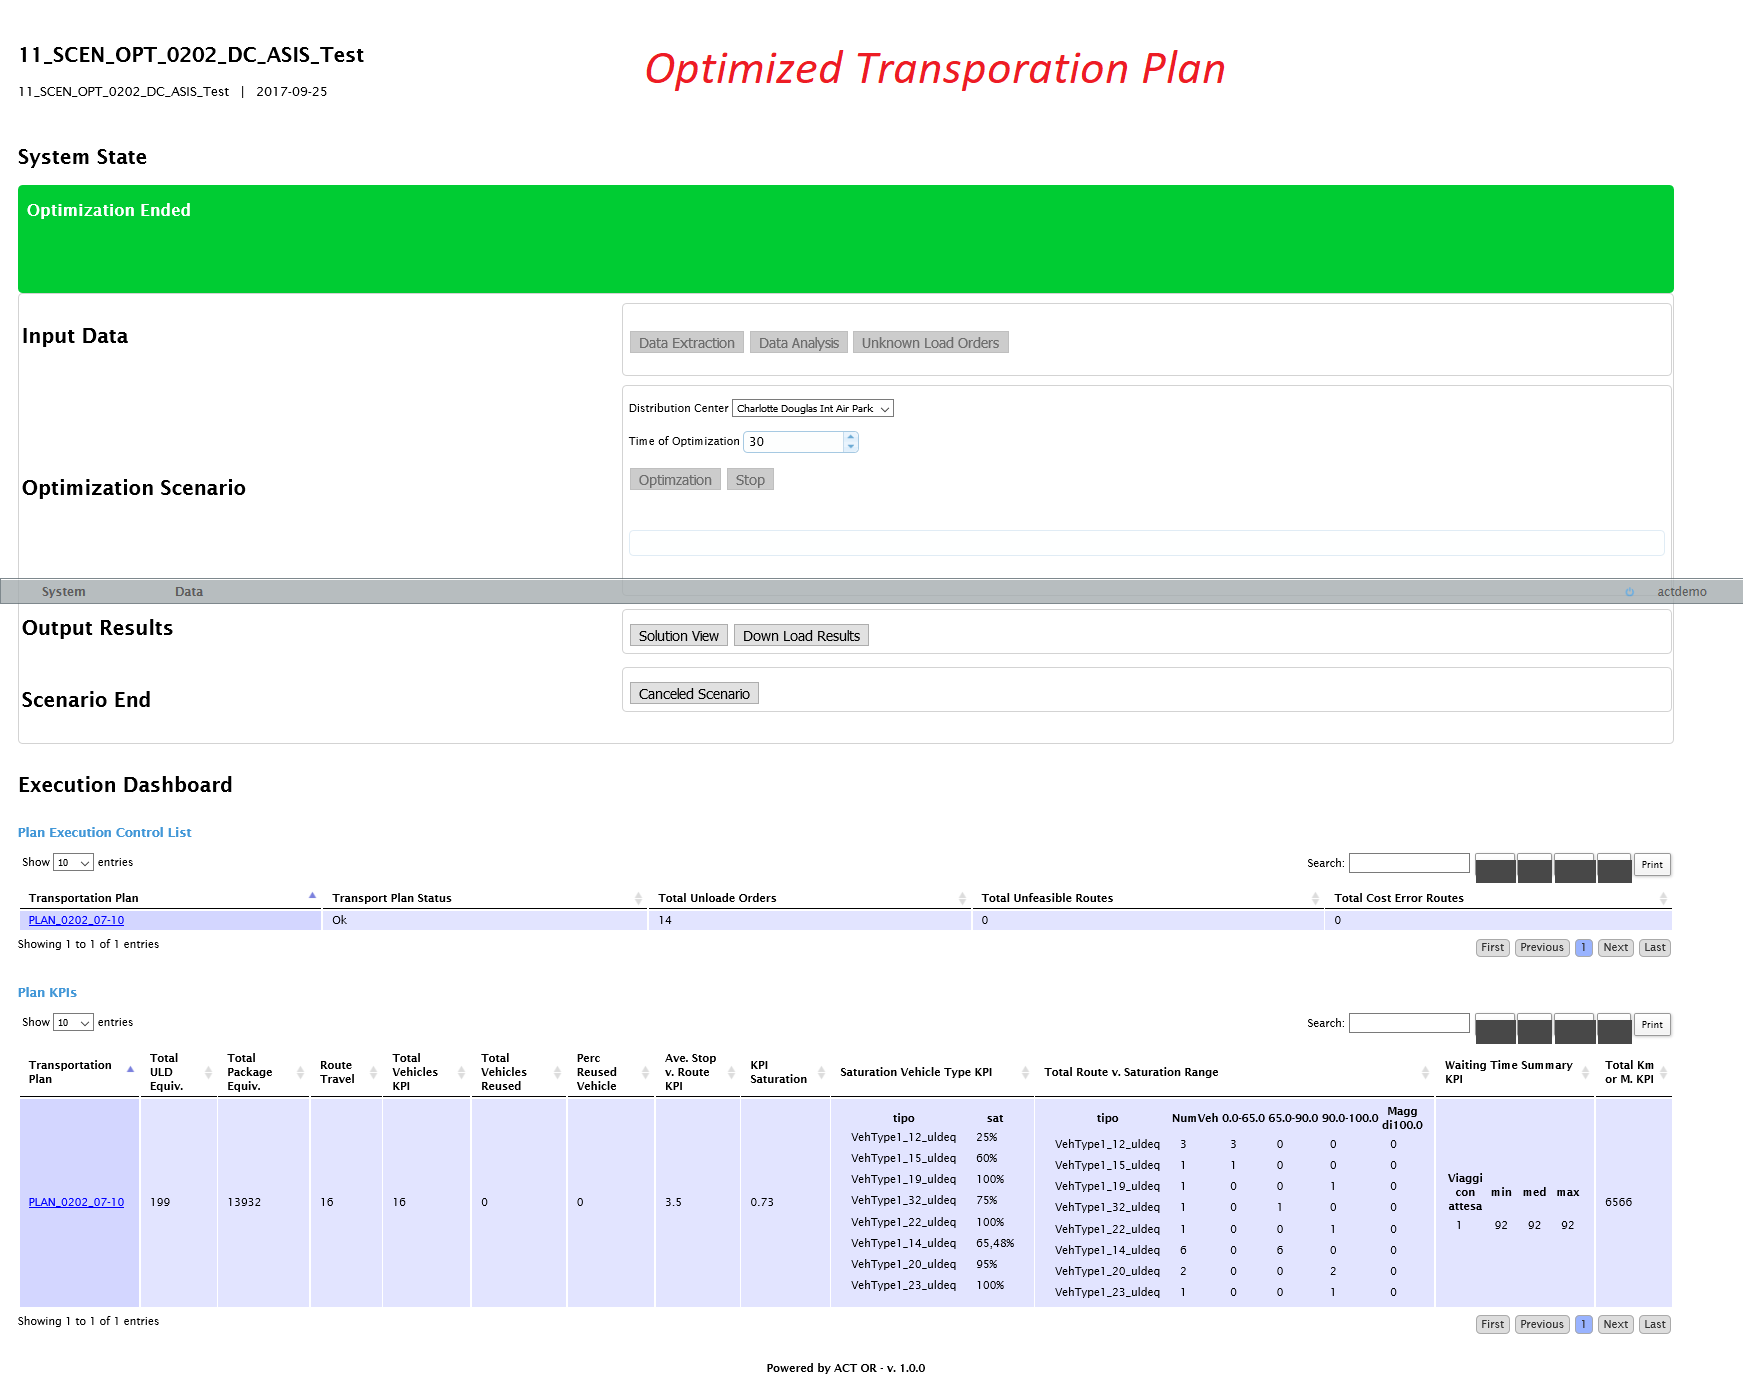 Optimized transportation plan